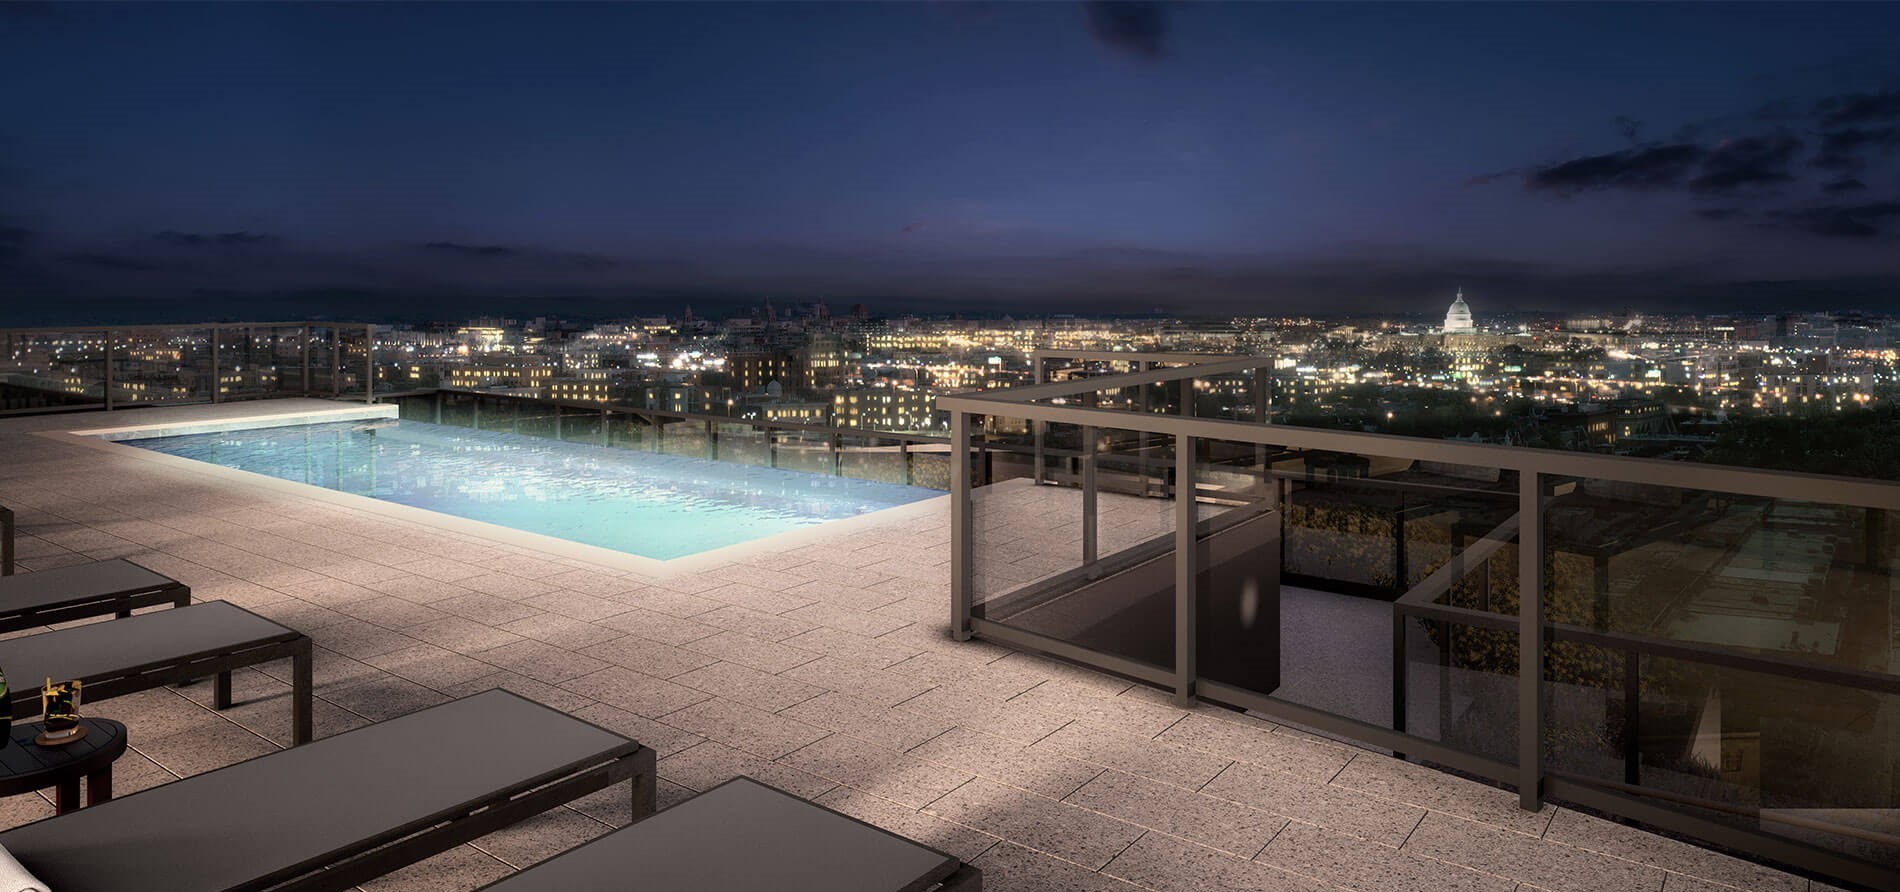 The MO pool deck nighttime rendering